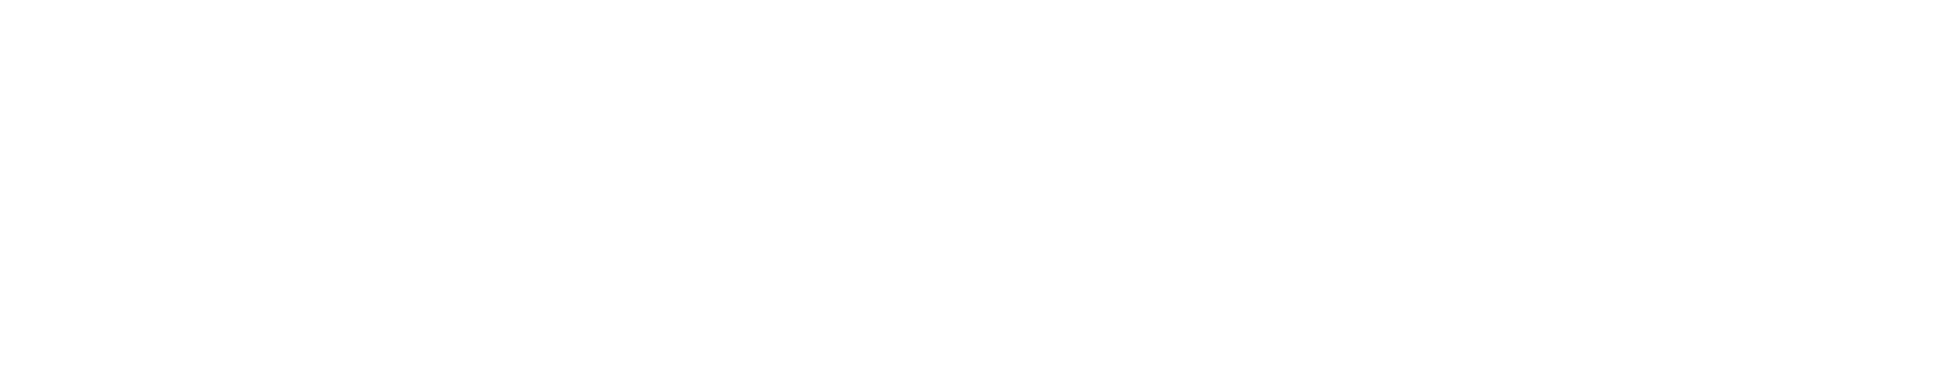 Silverfin Logo white